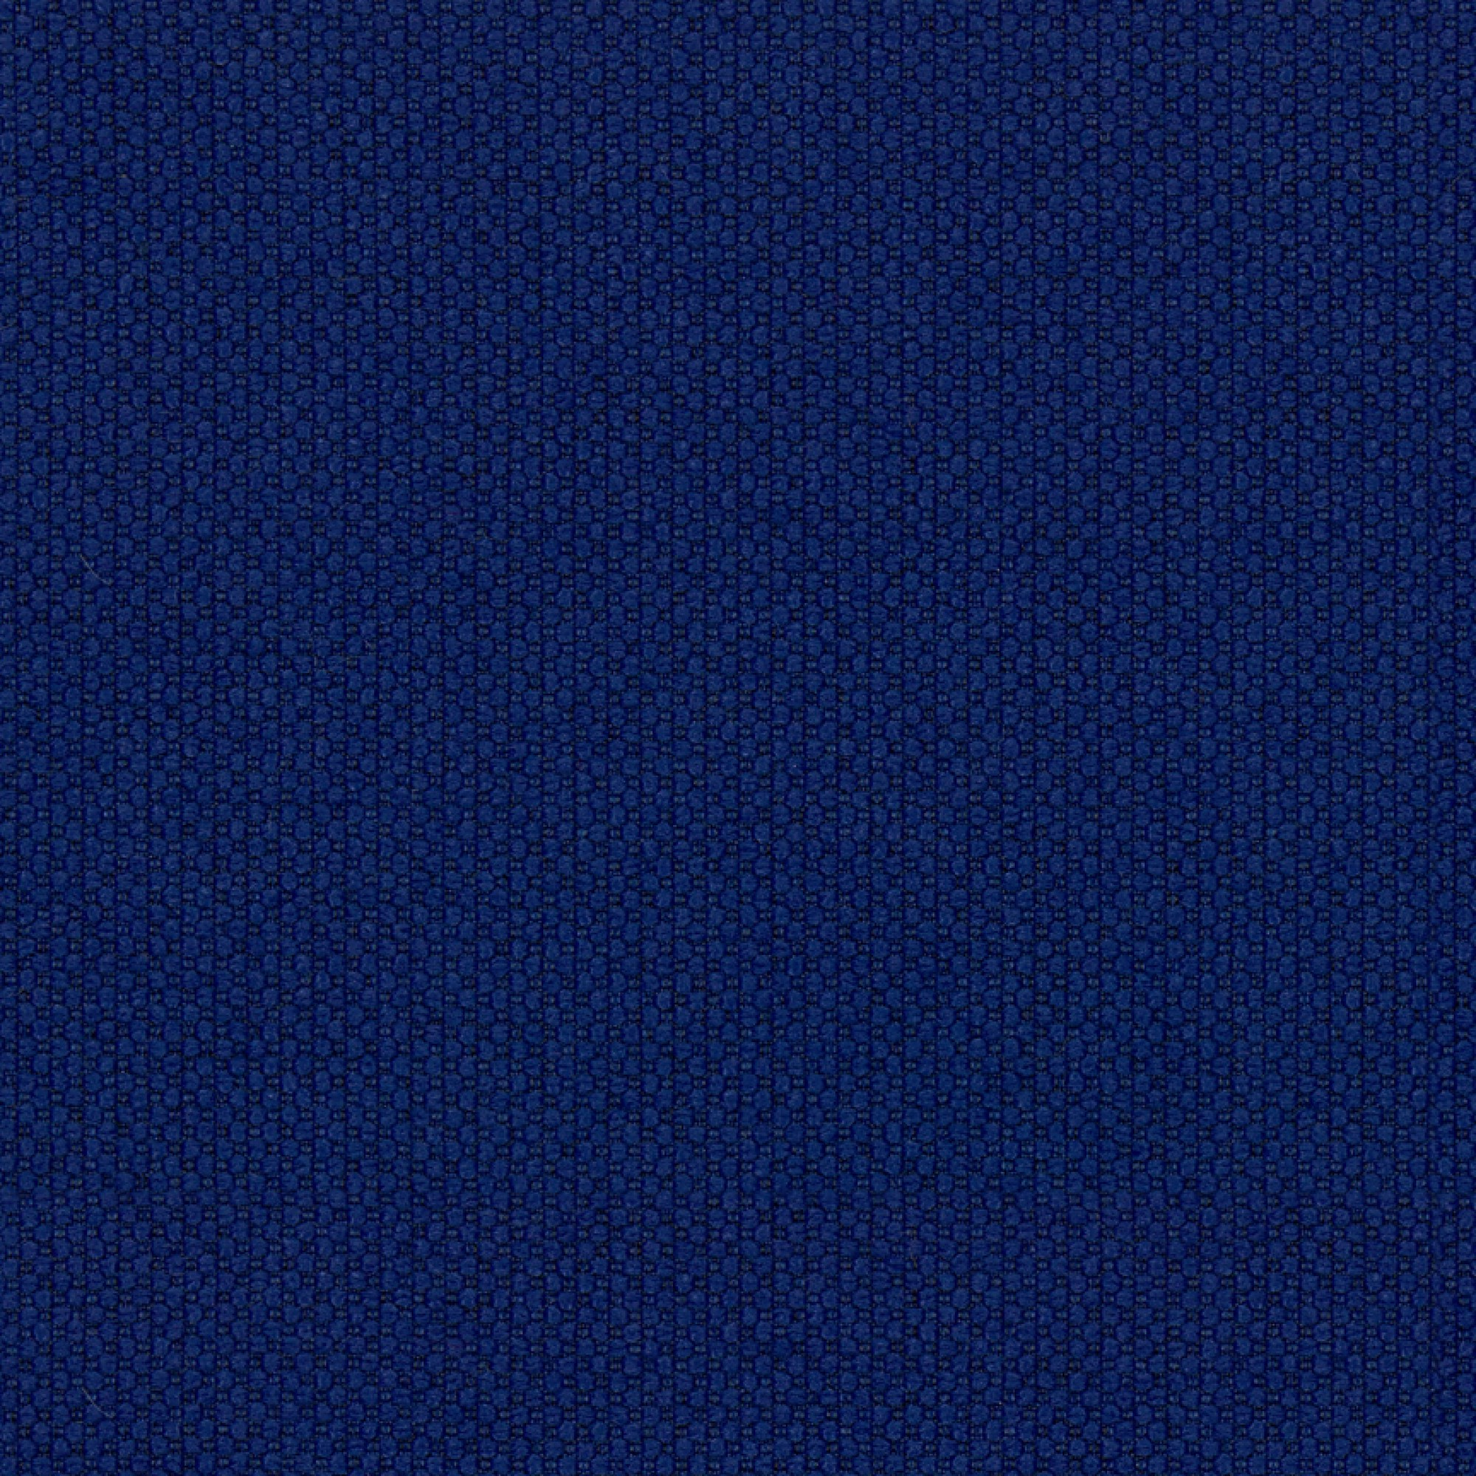 Fabric sample Merit 0007 blue